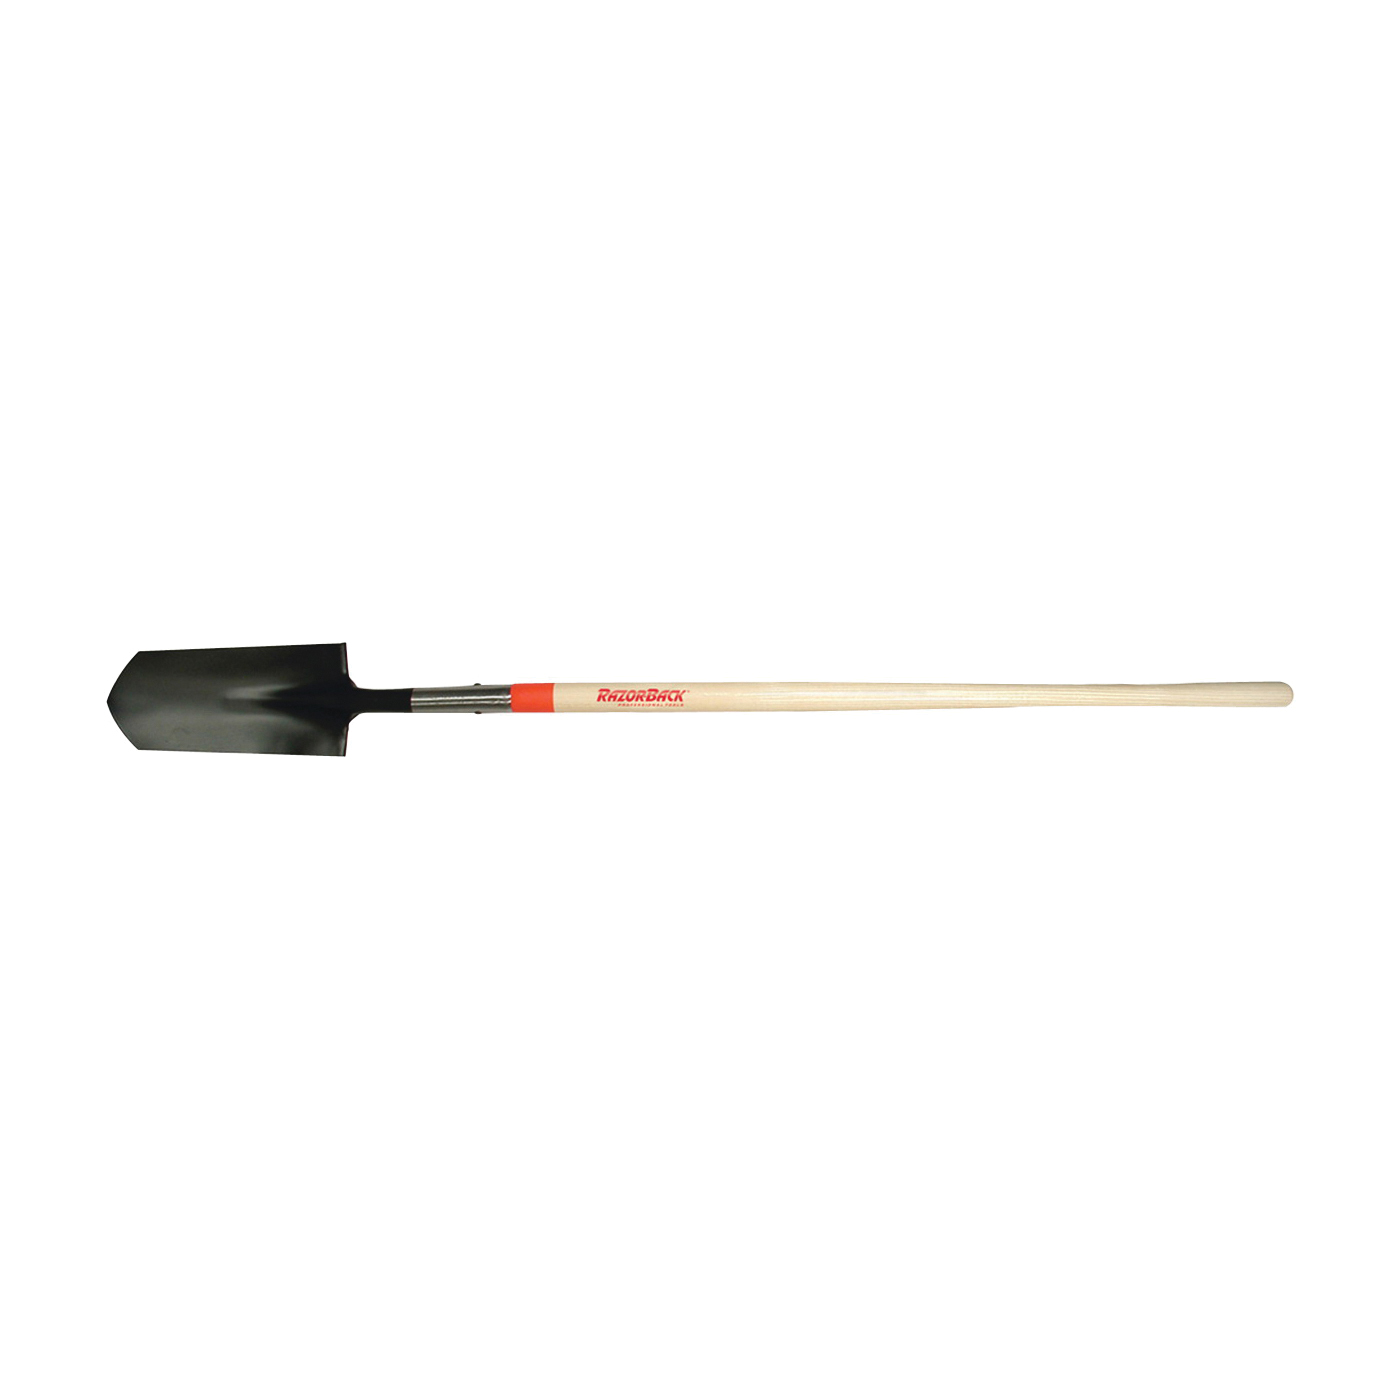 47115 Ditch Shovel, 5-3/4 in W Blade, Steel Blade, Hardwood Handle, Straight Handle, 48 in L Handle